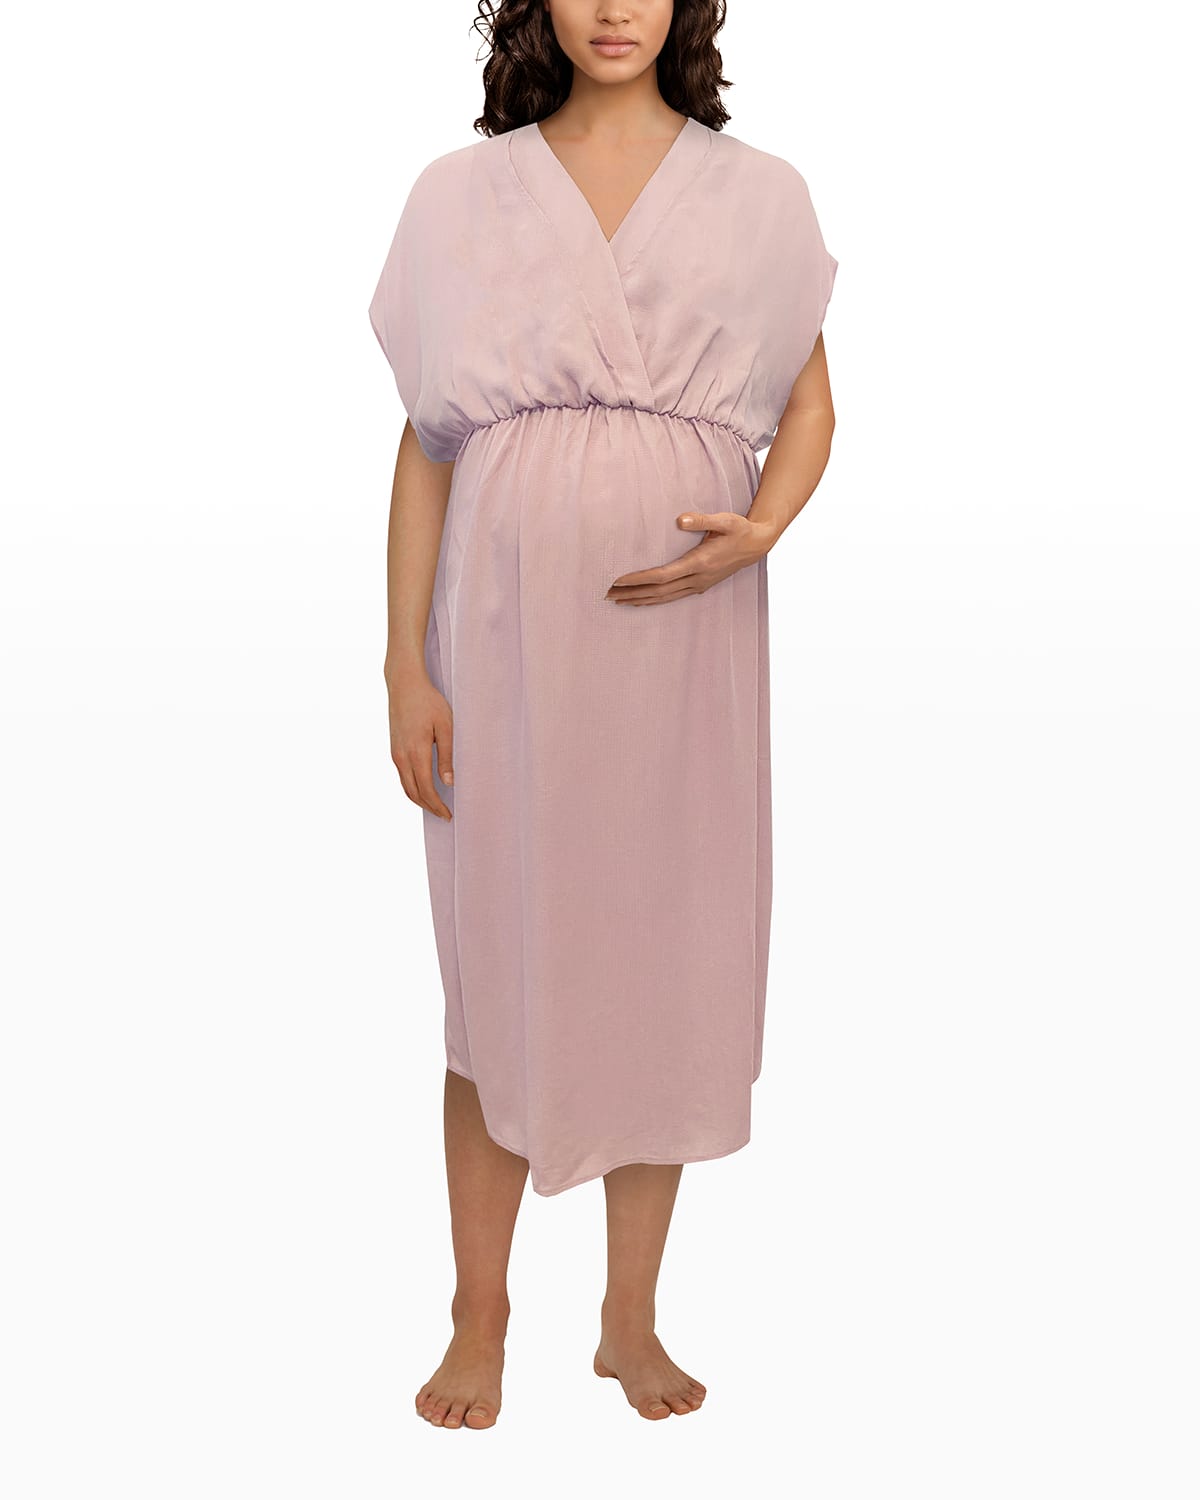 Emilia George Maternity Irene Short-Sleeve Blouson Dress